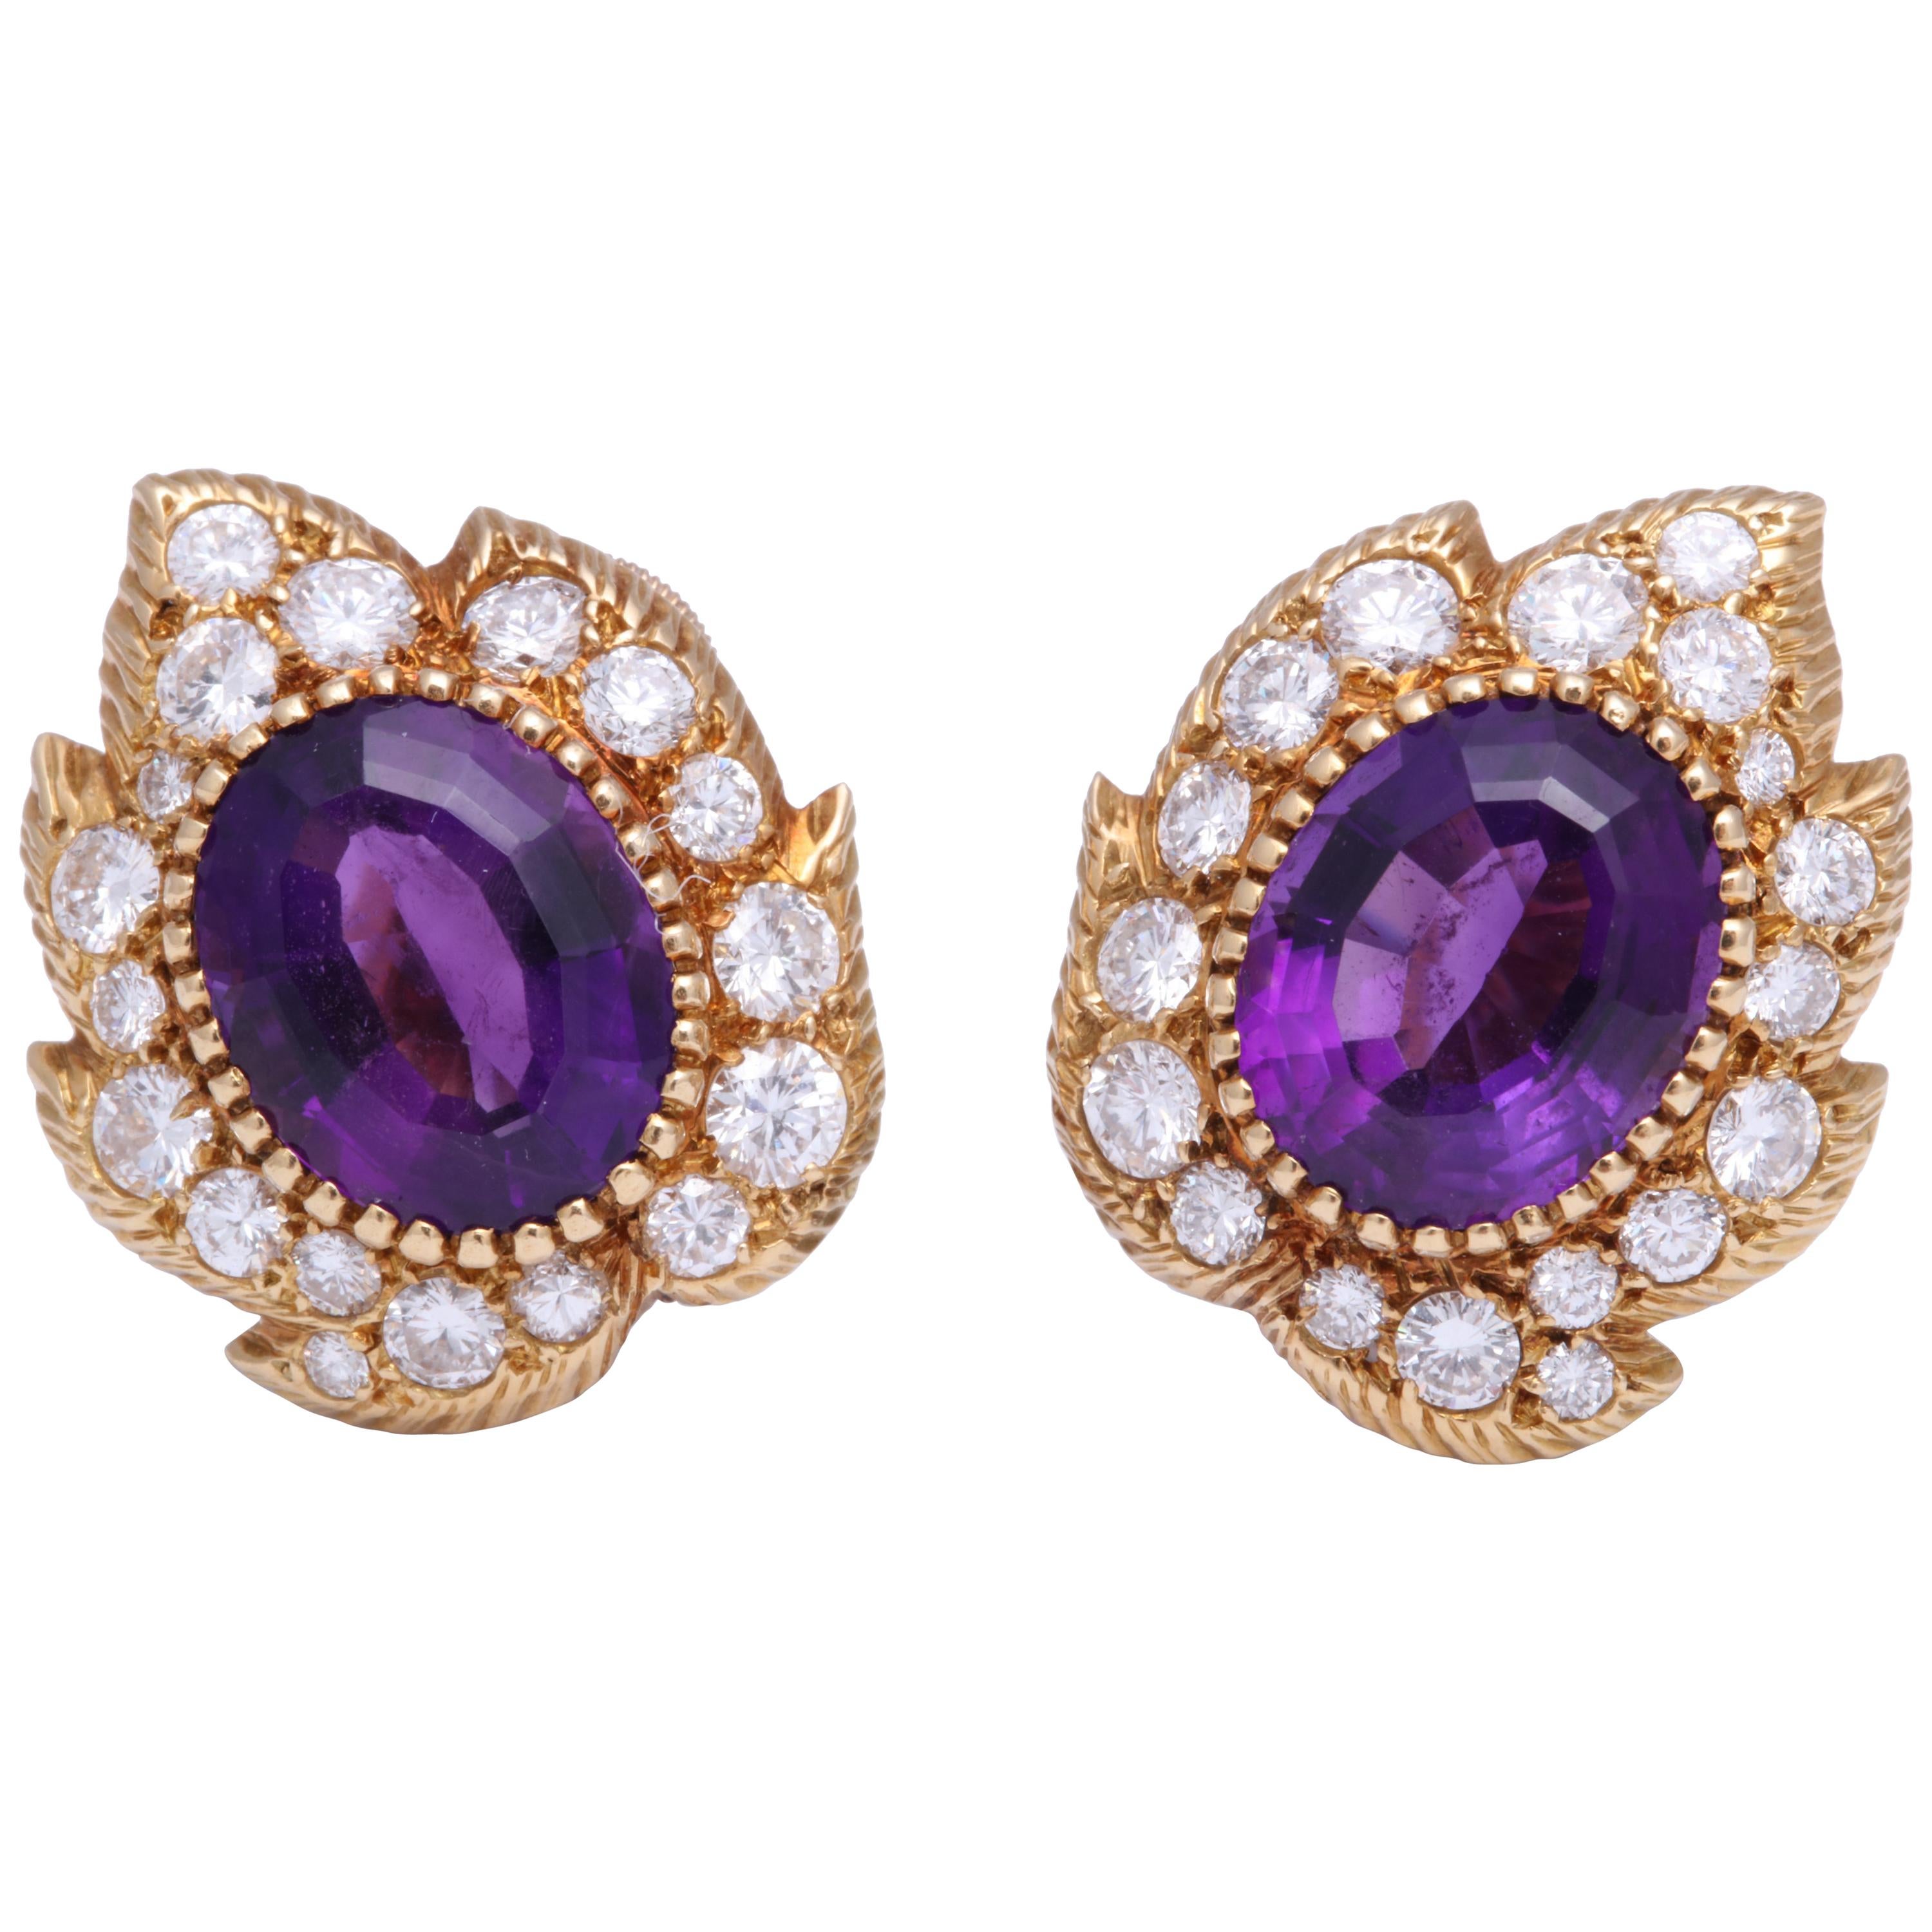 Cartier Amethyst and Diamond Earrings